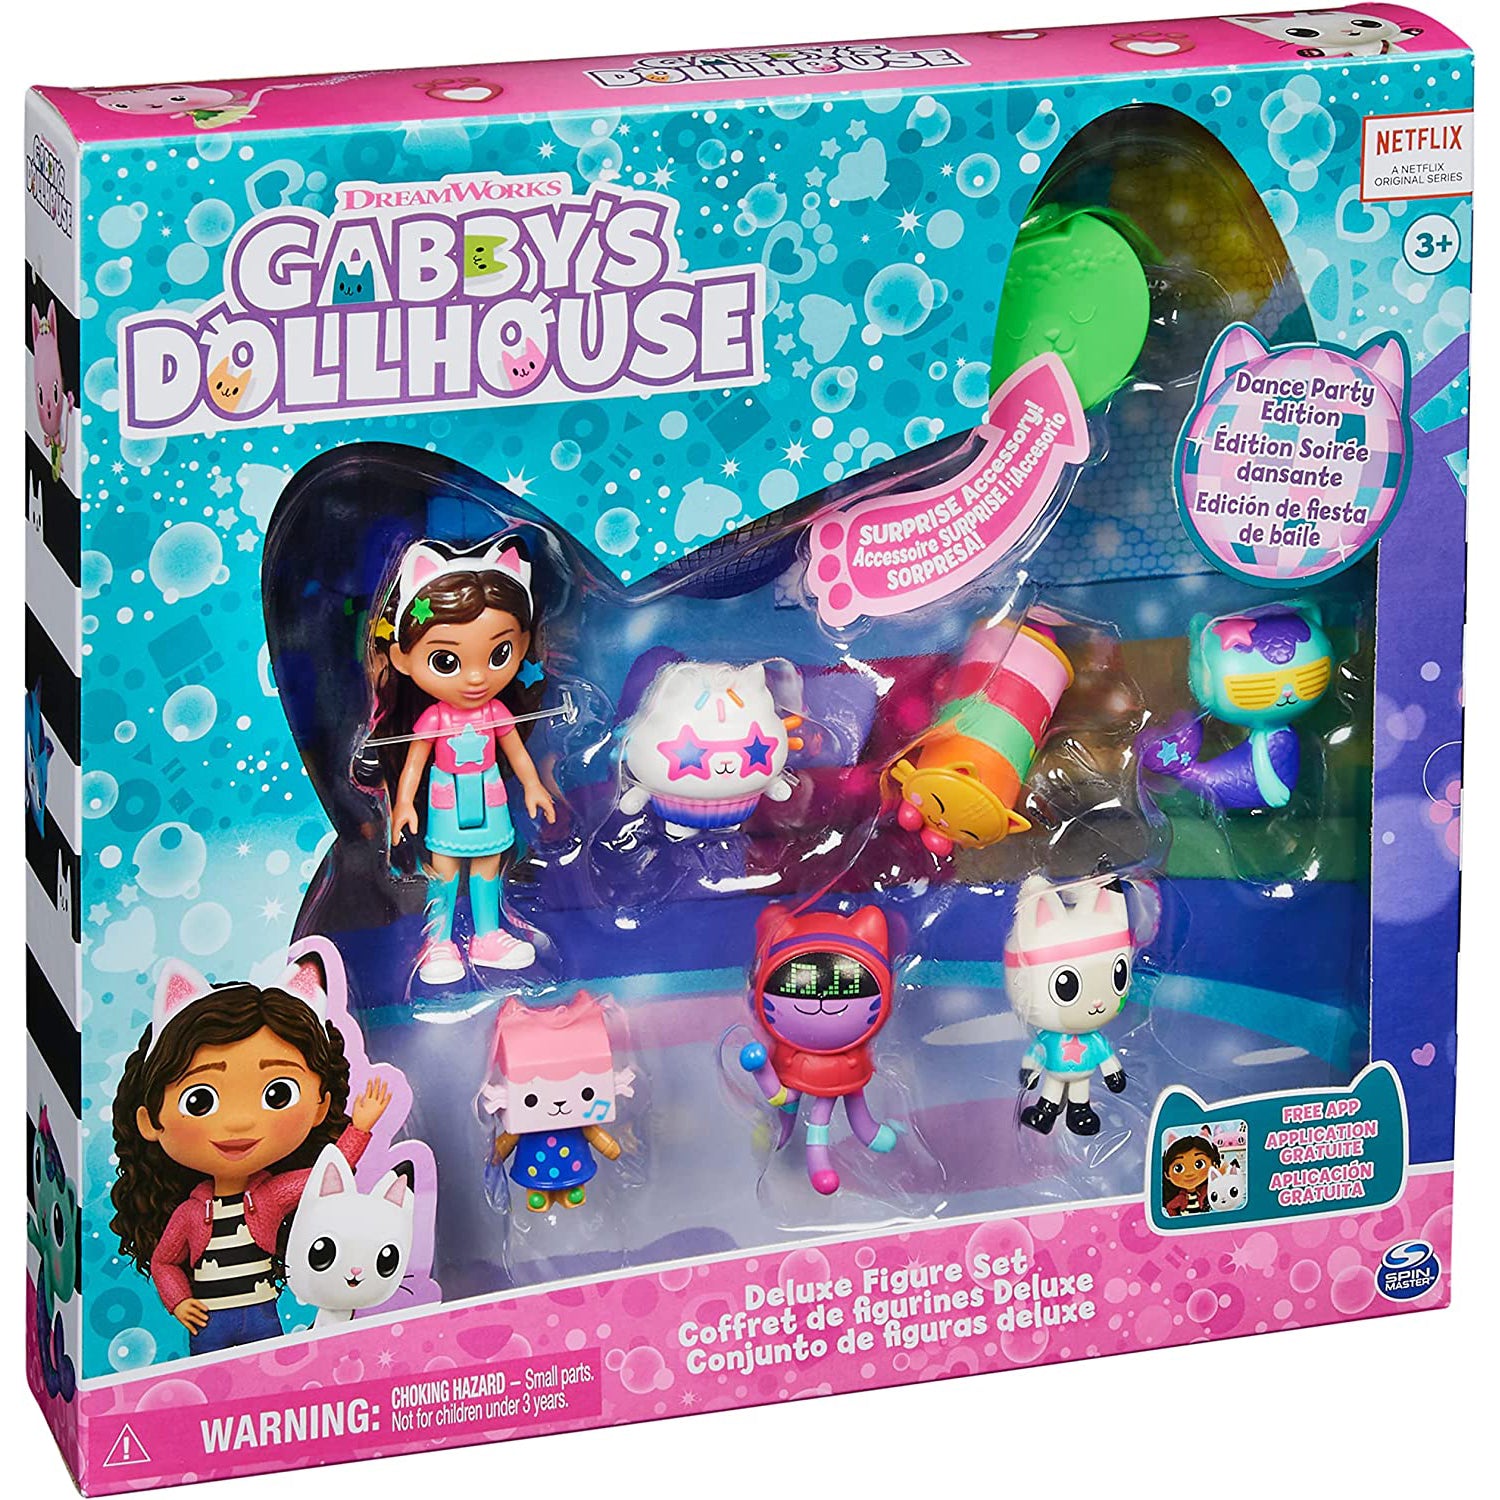 Gabby's Dollhouse, Meow-Mazing - Mini figuras (exclusivo de ),  juguetes para niños a partir de 3 años